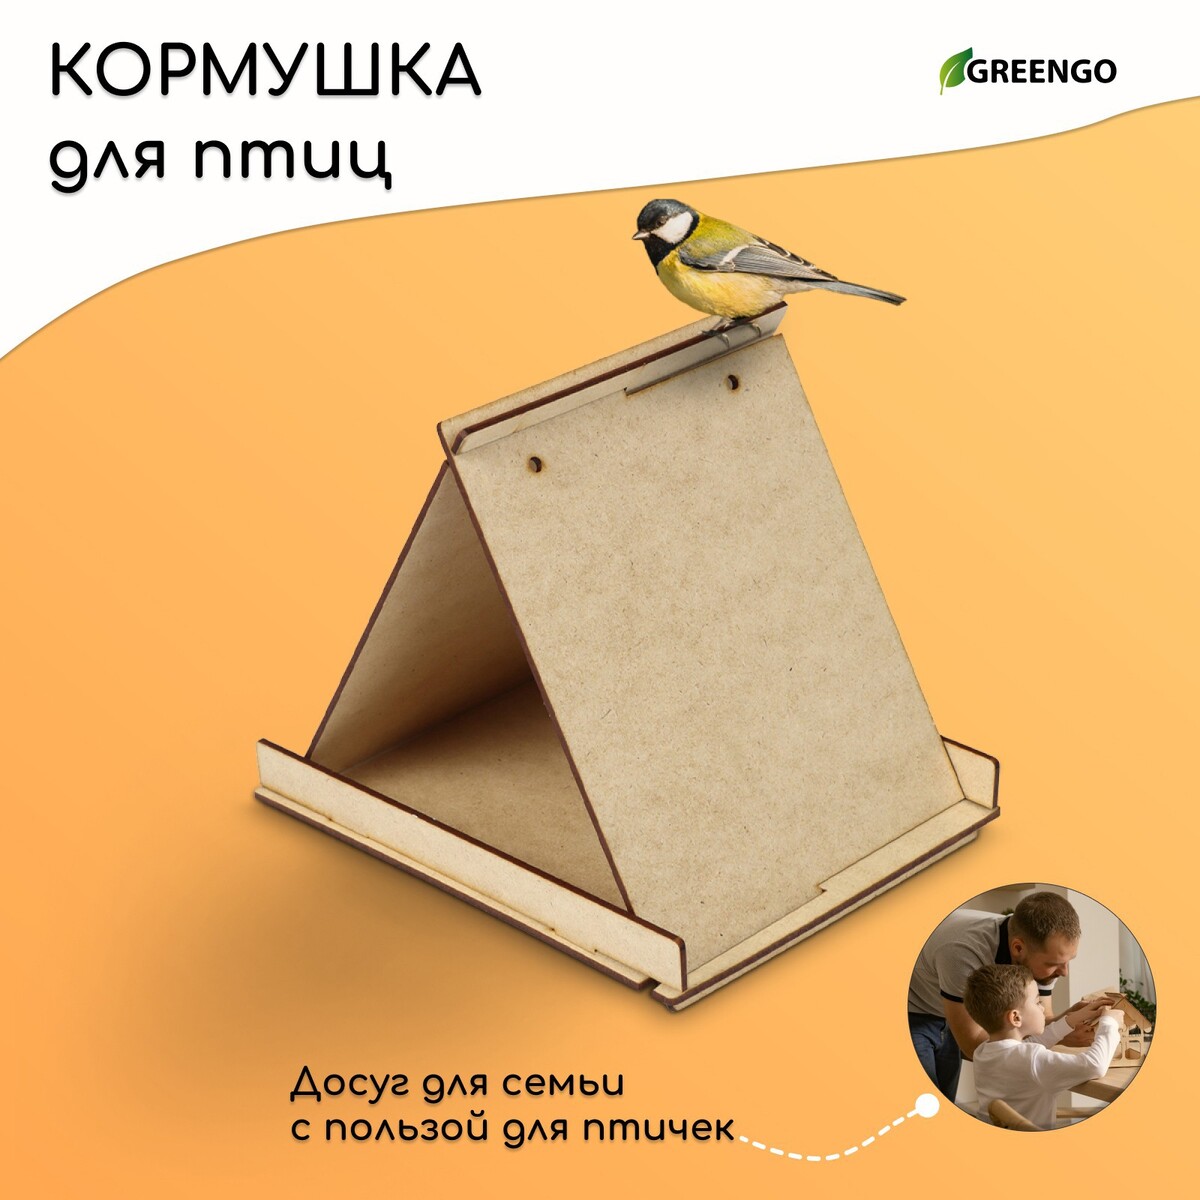 Кормушка-конструктор из хдф для птиц конструктор деревянный древо игр кормушка для птиц малая